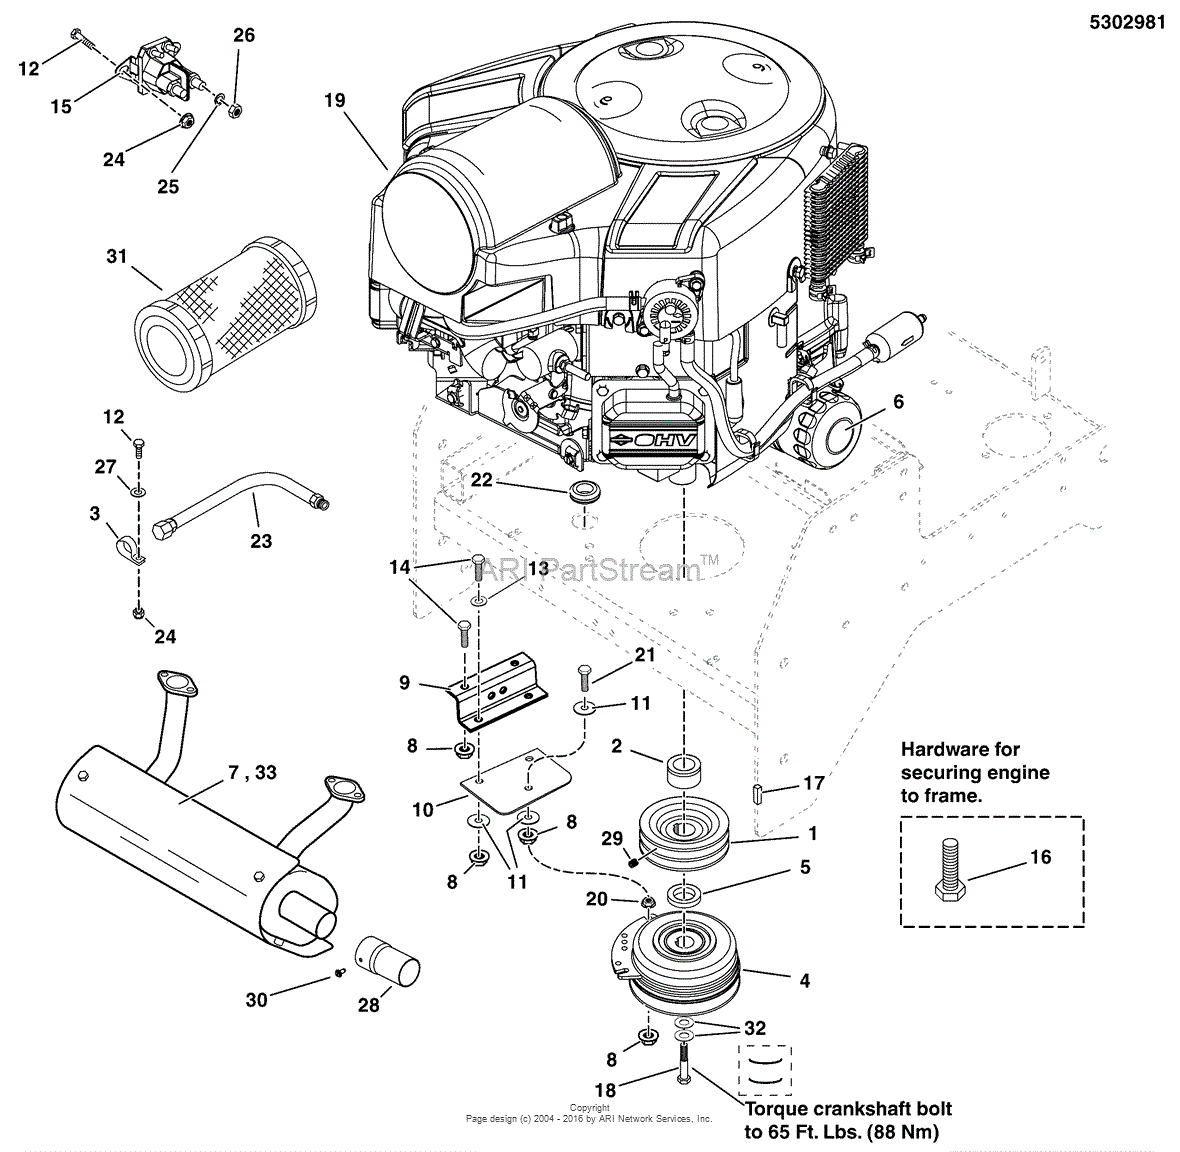 briggs and stratton 10 hp engine wiring diagram